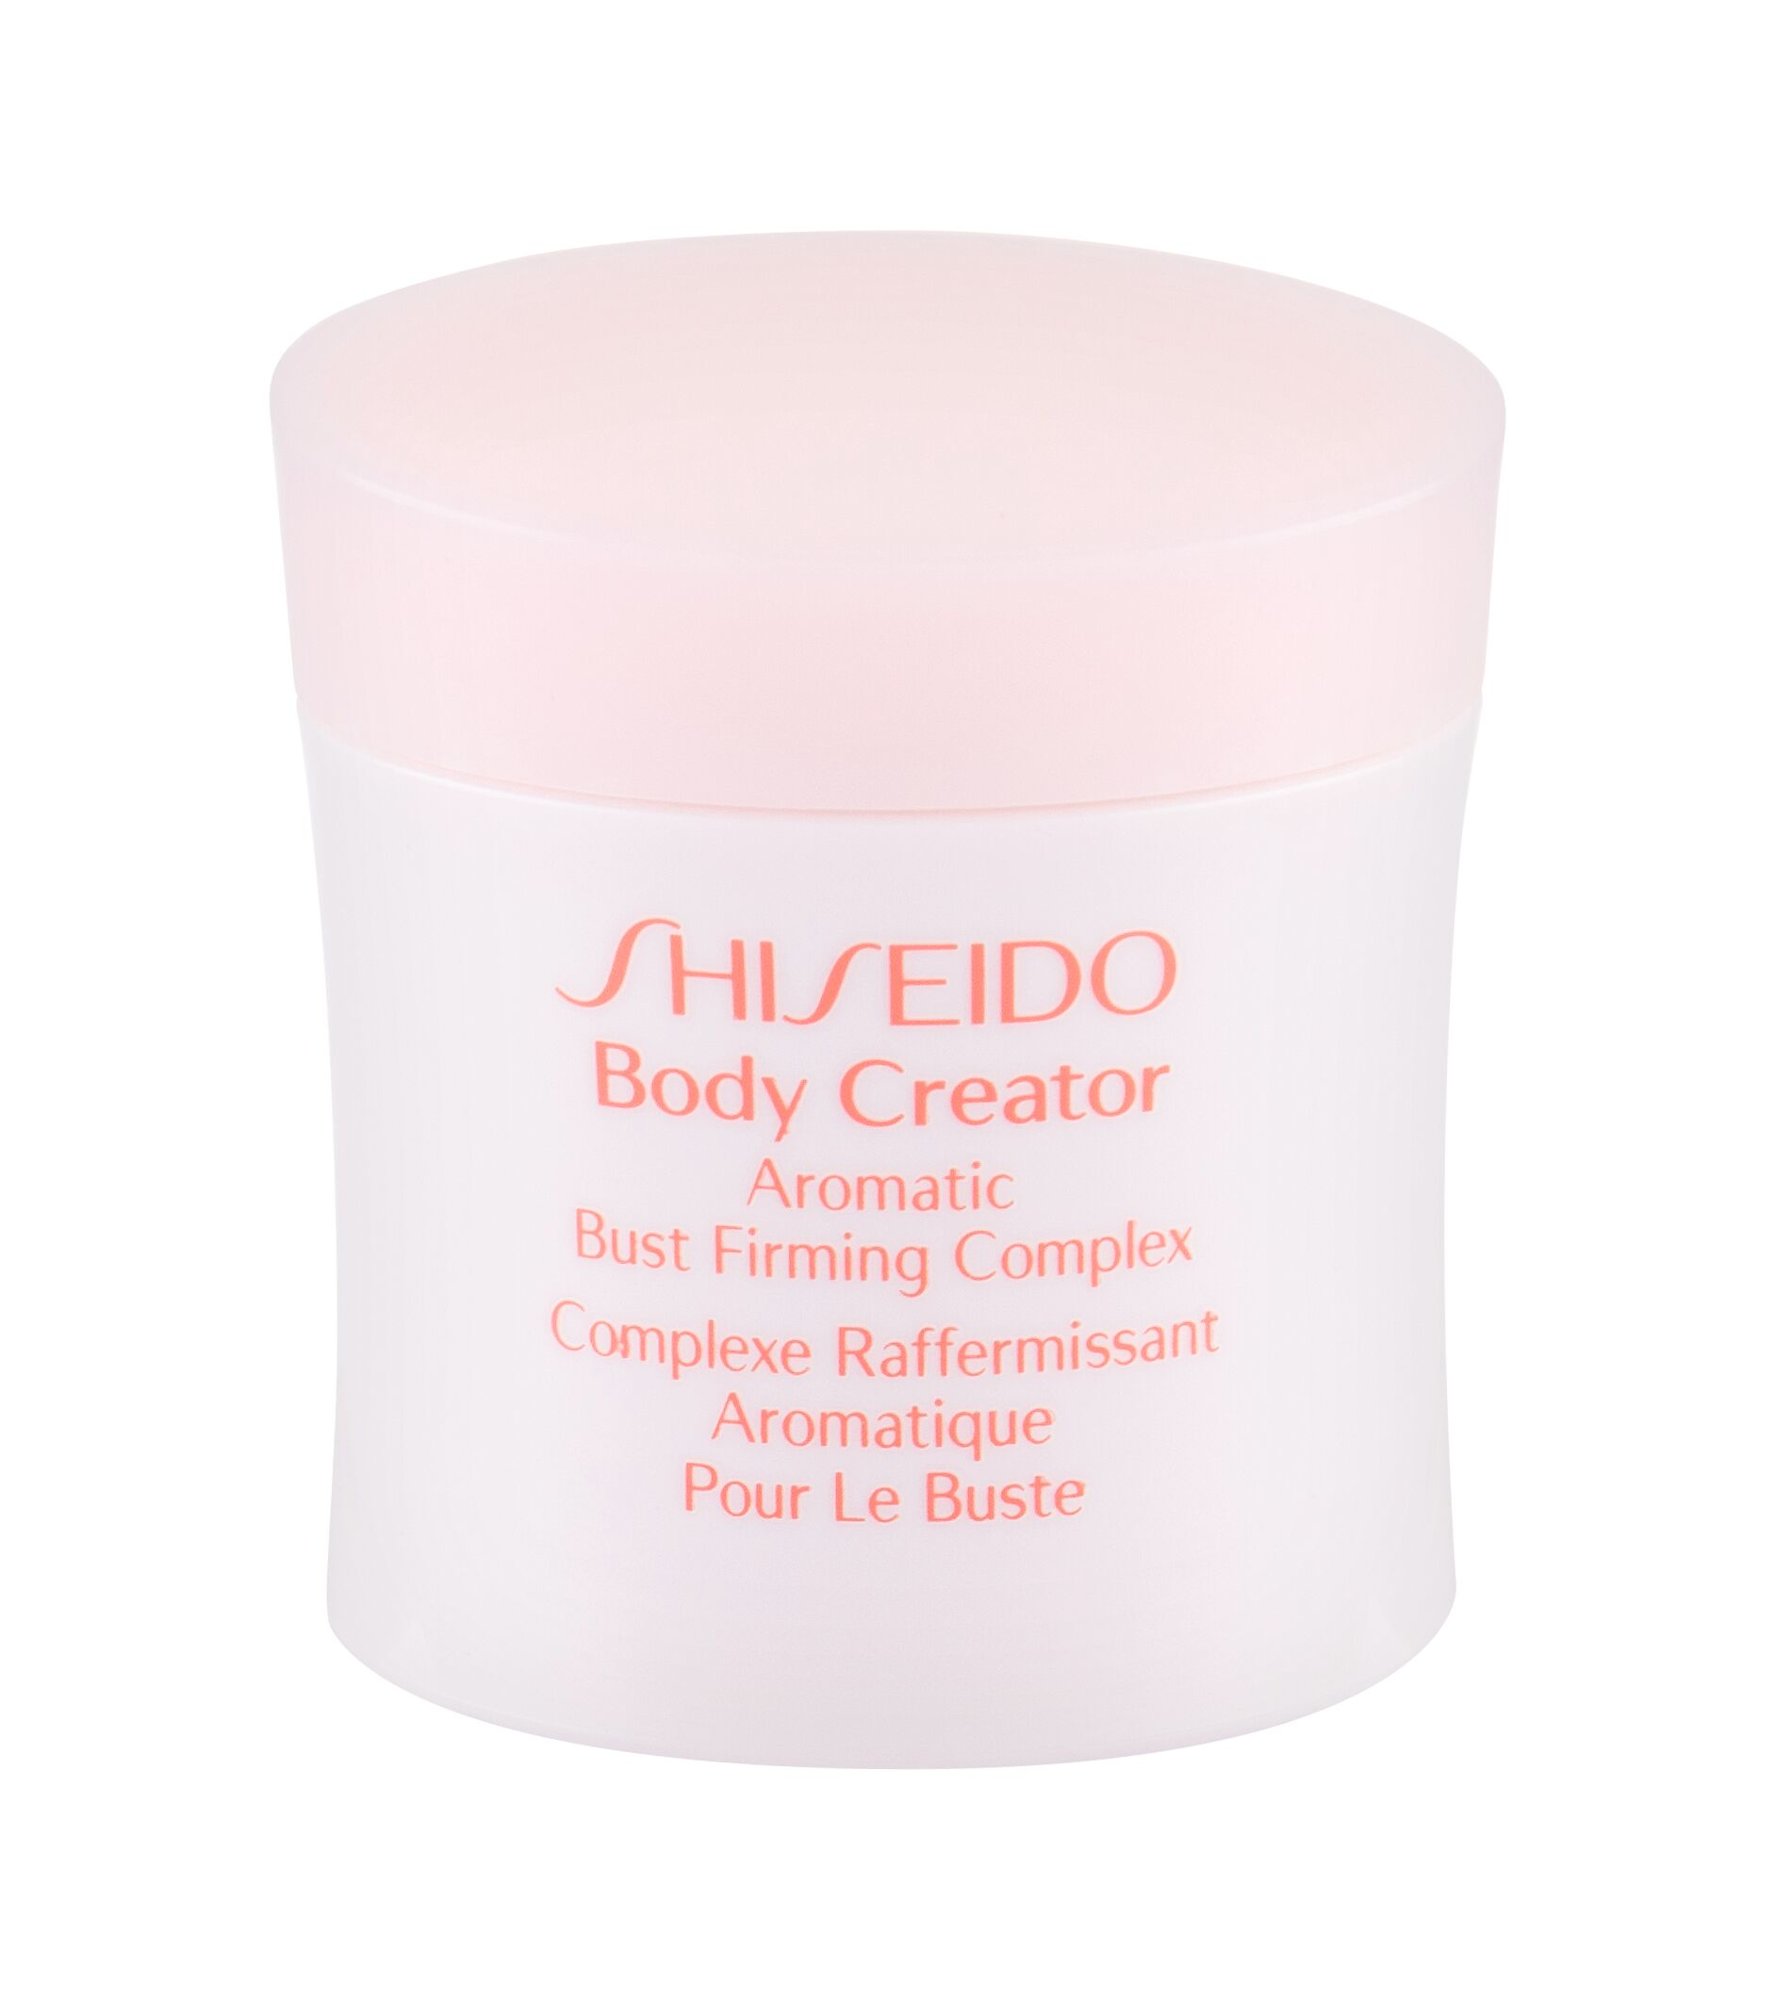 Shiseido BODY CREATOR Aromatic Bust Firming Complex